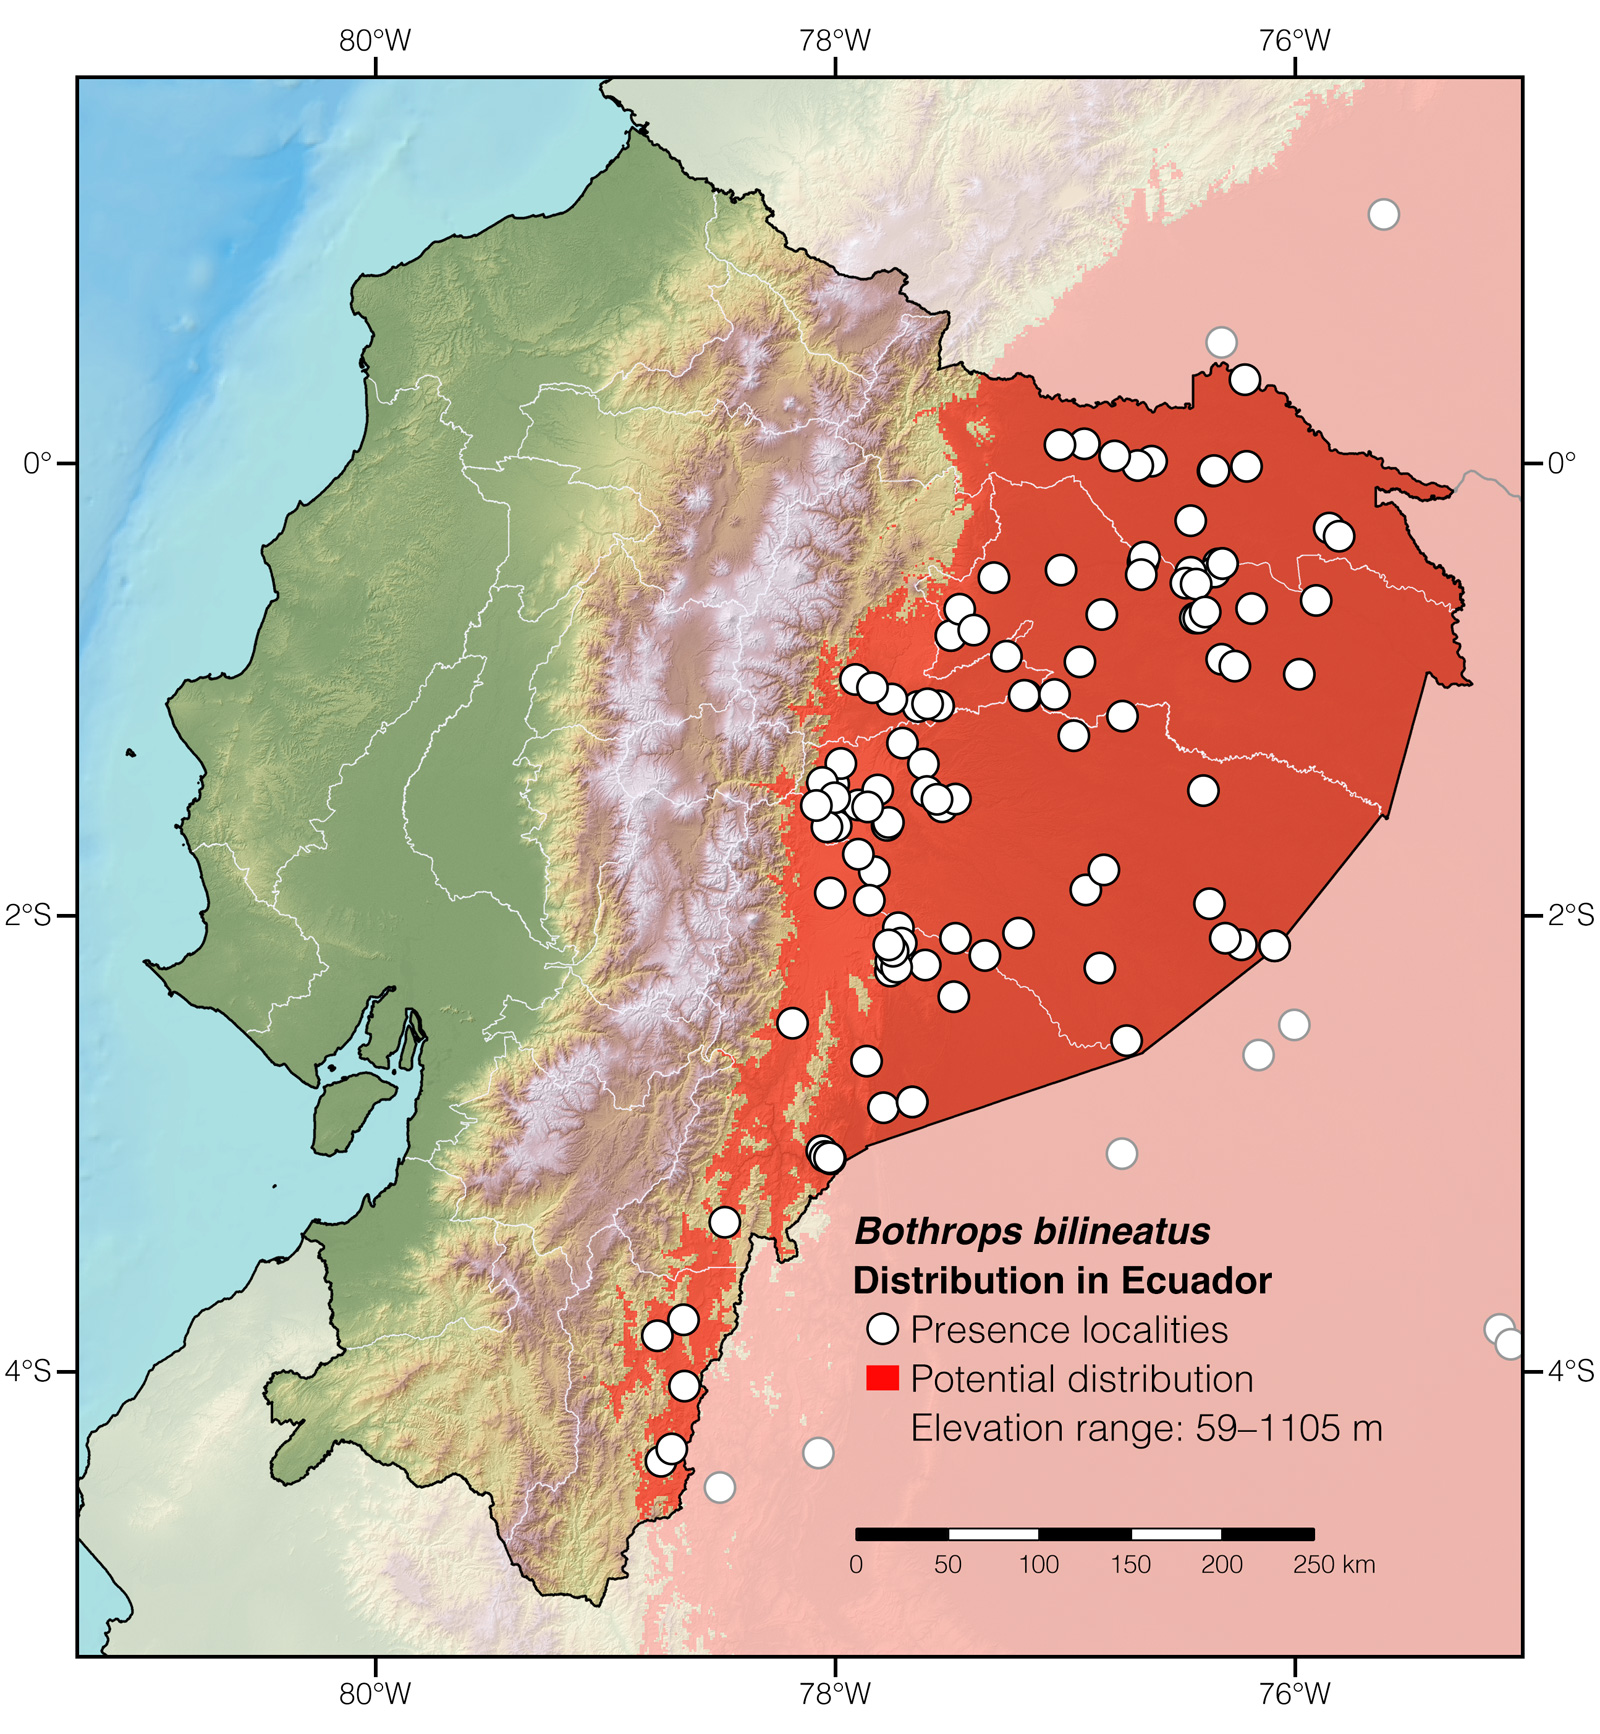 Distribution of Bothrops bilineatus in Ecuador